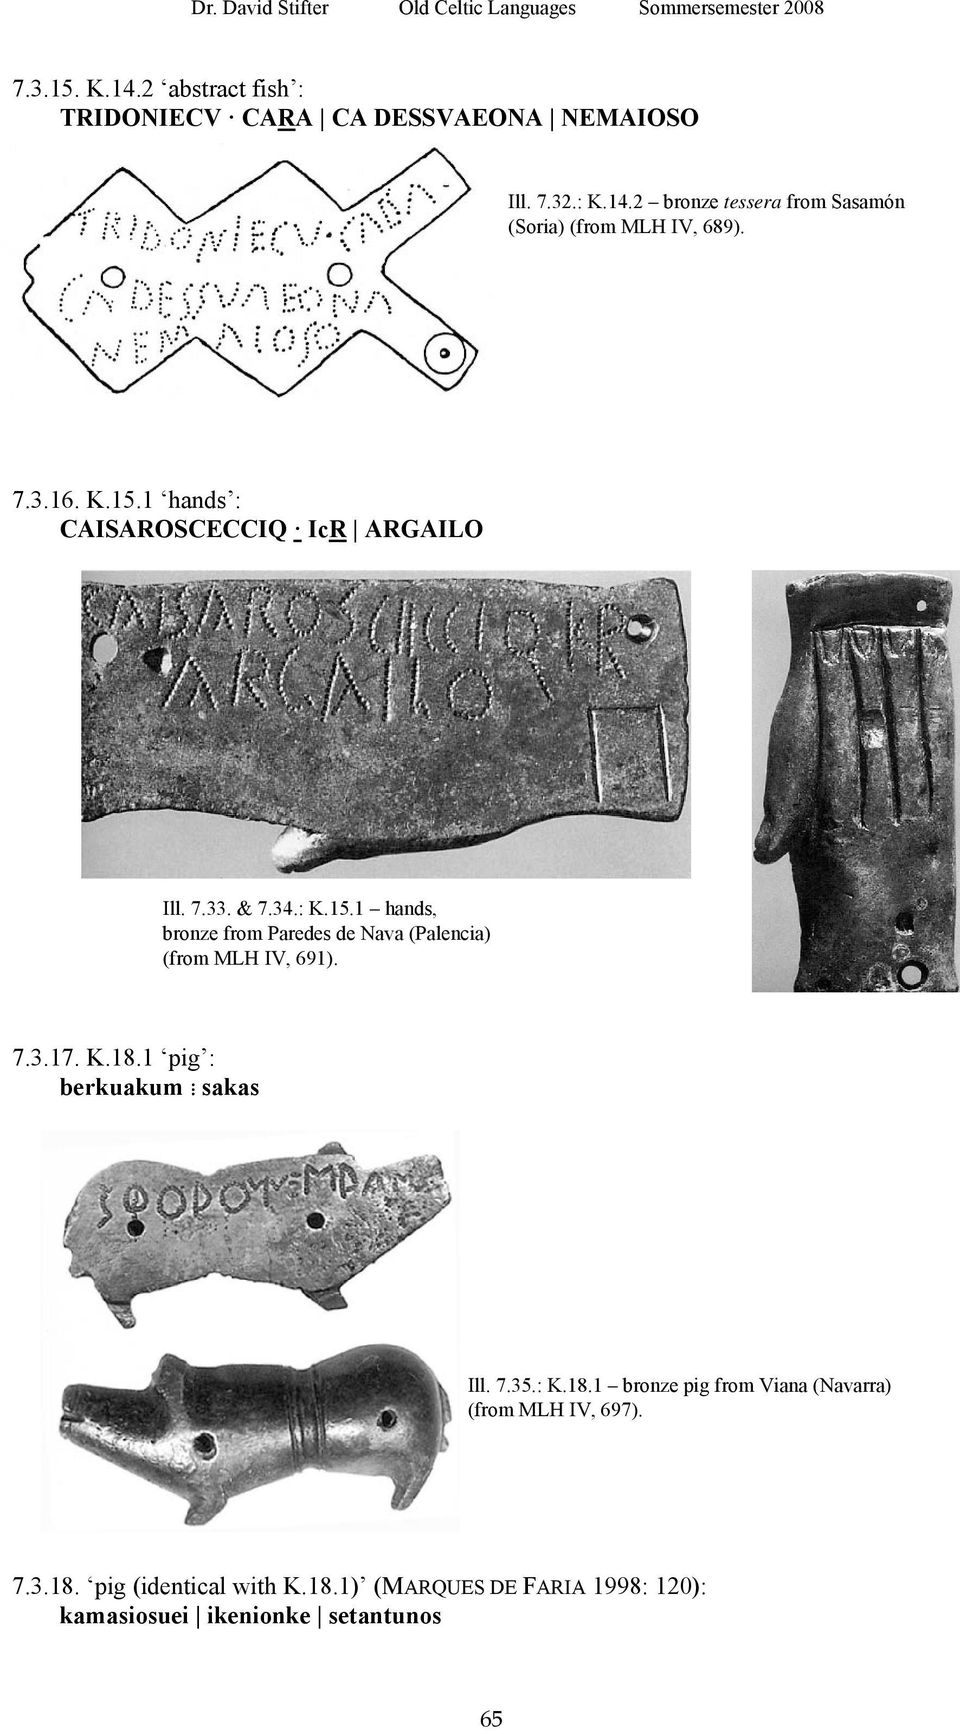 7.3.17. K.18.1 pig : berkuakum ; sakas Ill. 7.35.: K.18.1 bronze pig from Viana (Navarra) (from MLH IV, 697). 7.3.18. pig (identical with K.